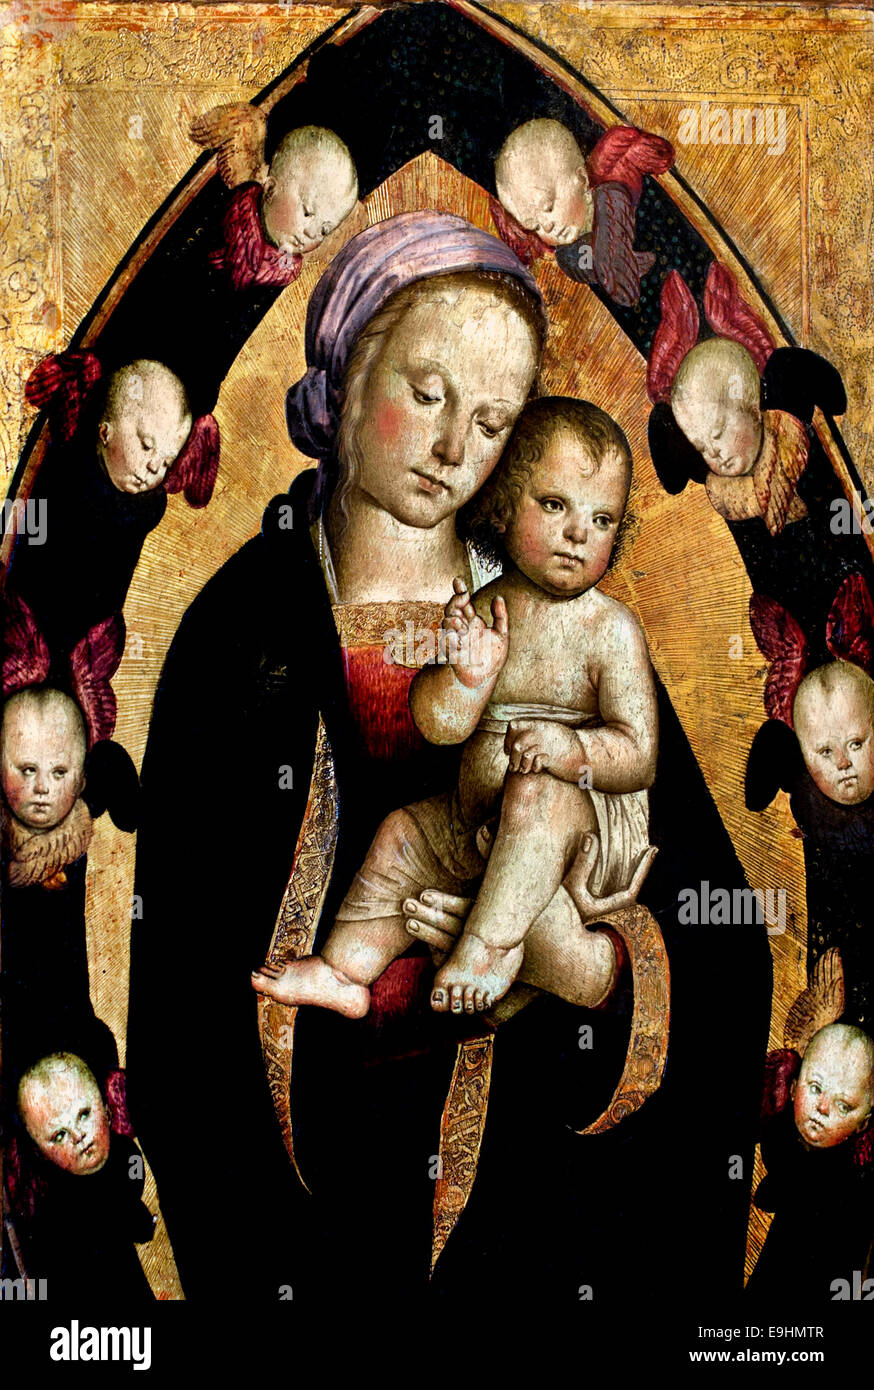 The Virgin and Child 15the century  in a glory of cherubs ( cherubins ) Umbria Italy Italian Stock Photo